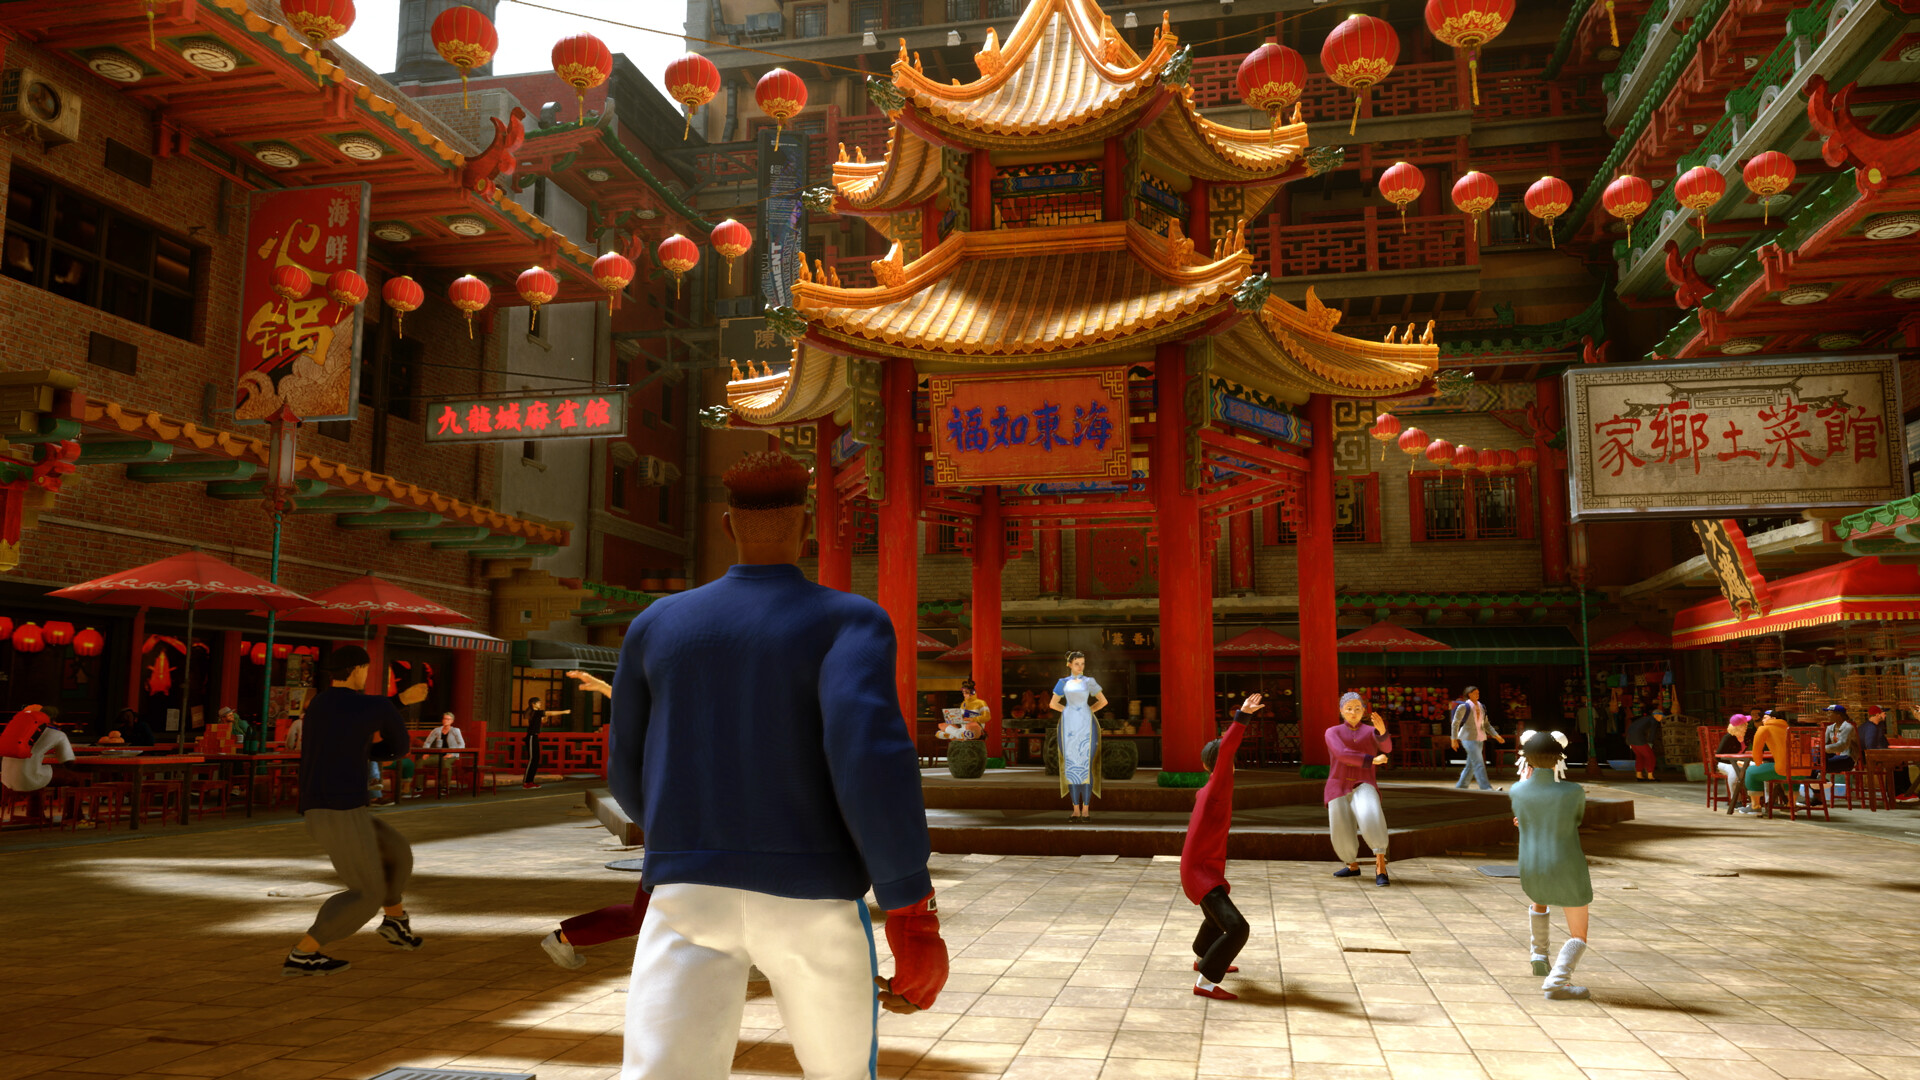 Street Fighter 6 EU Xbox Series X,S CD Key